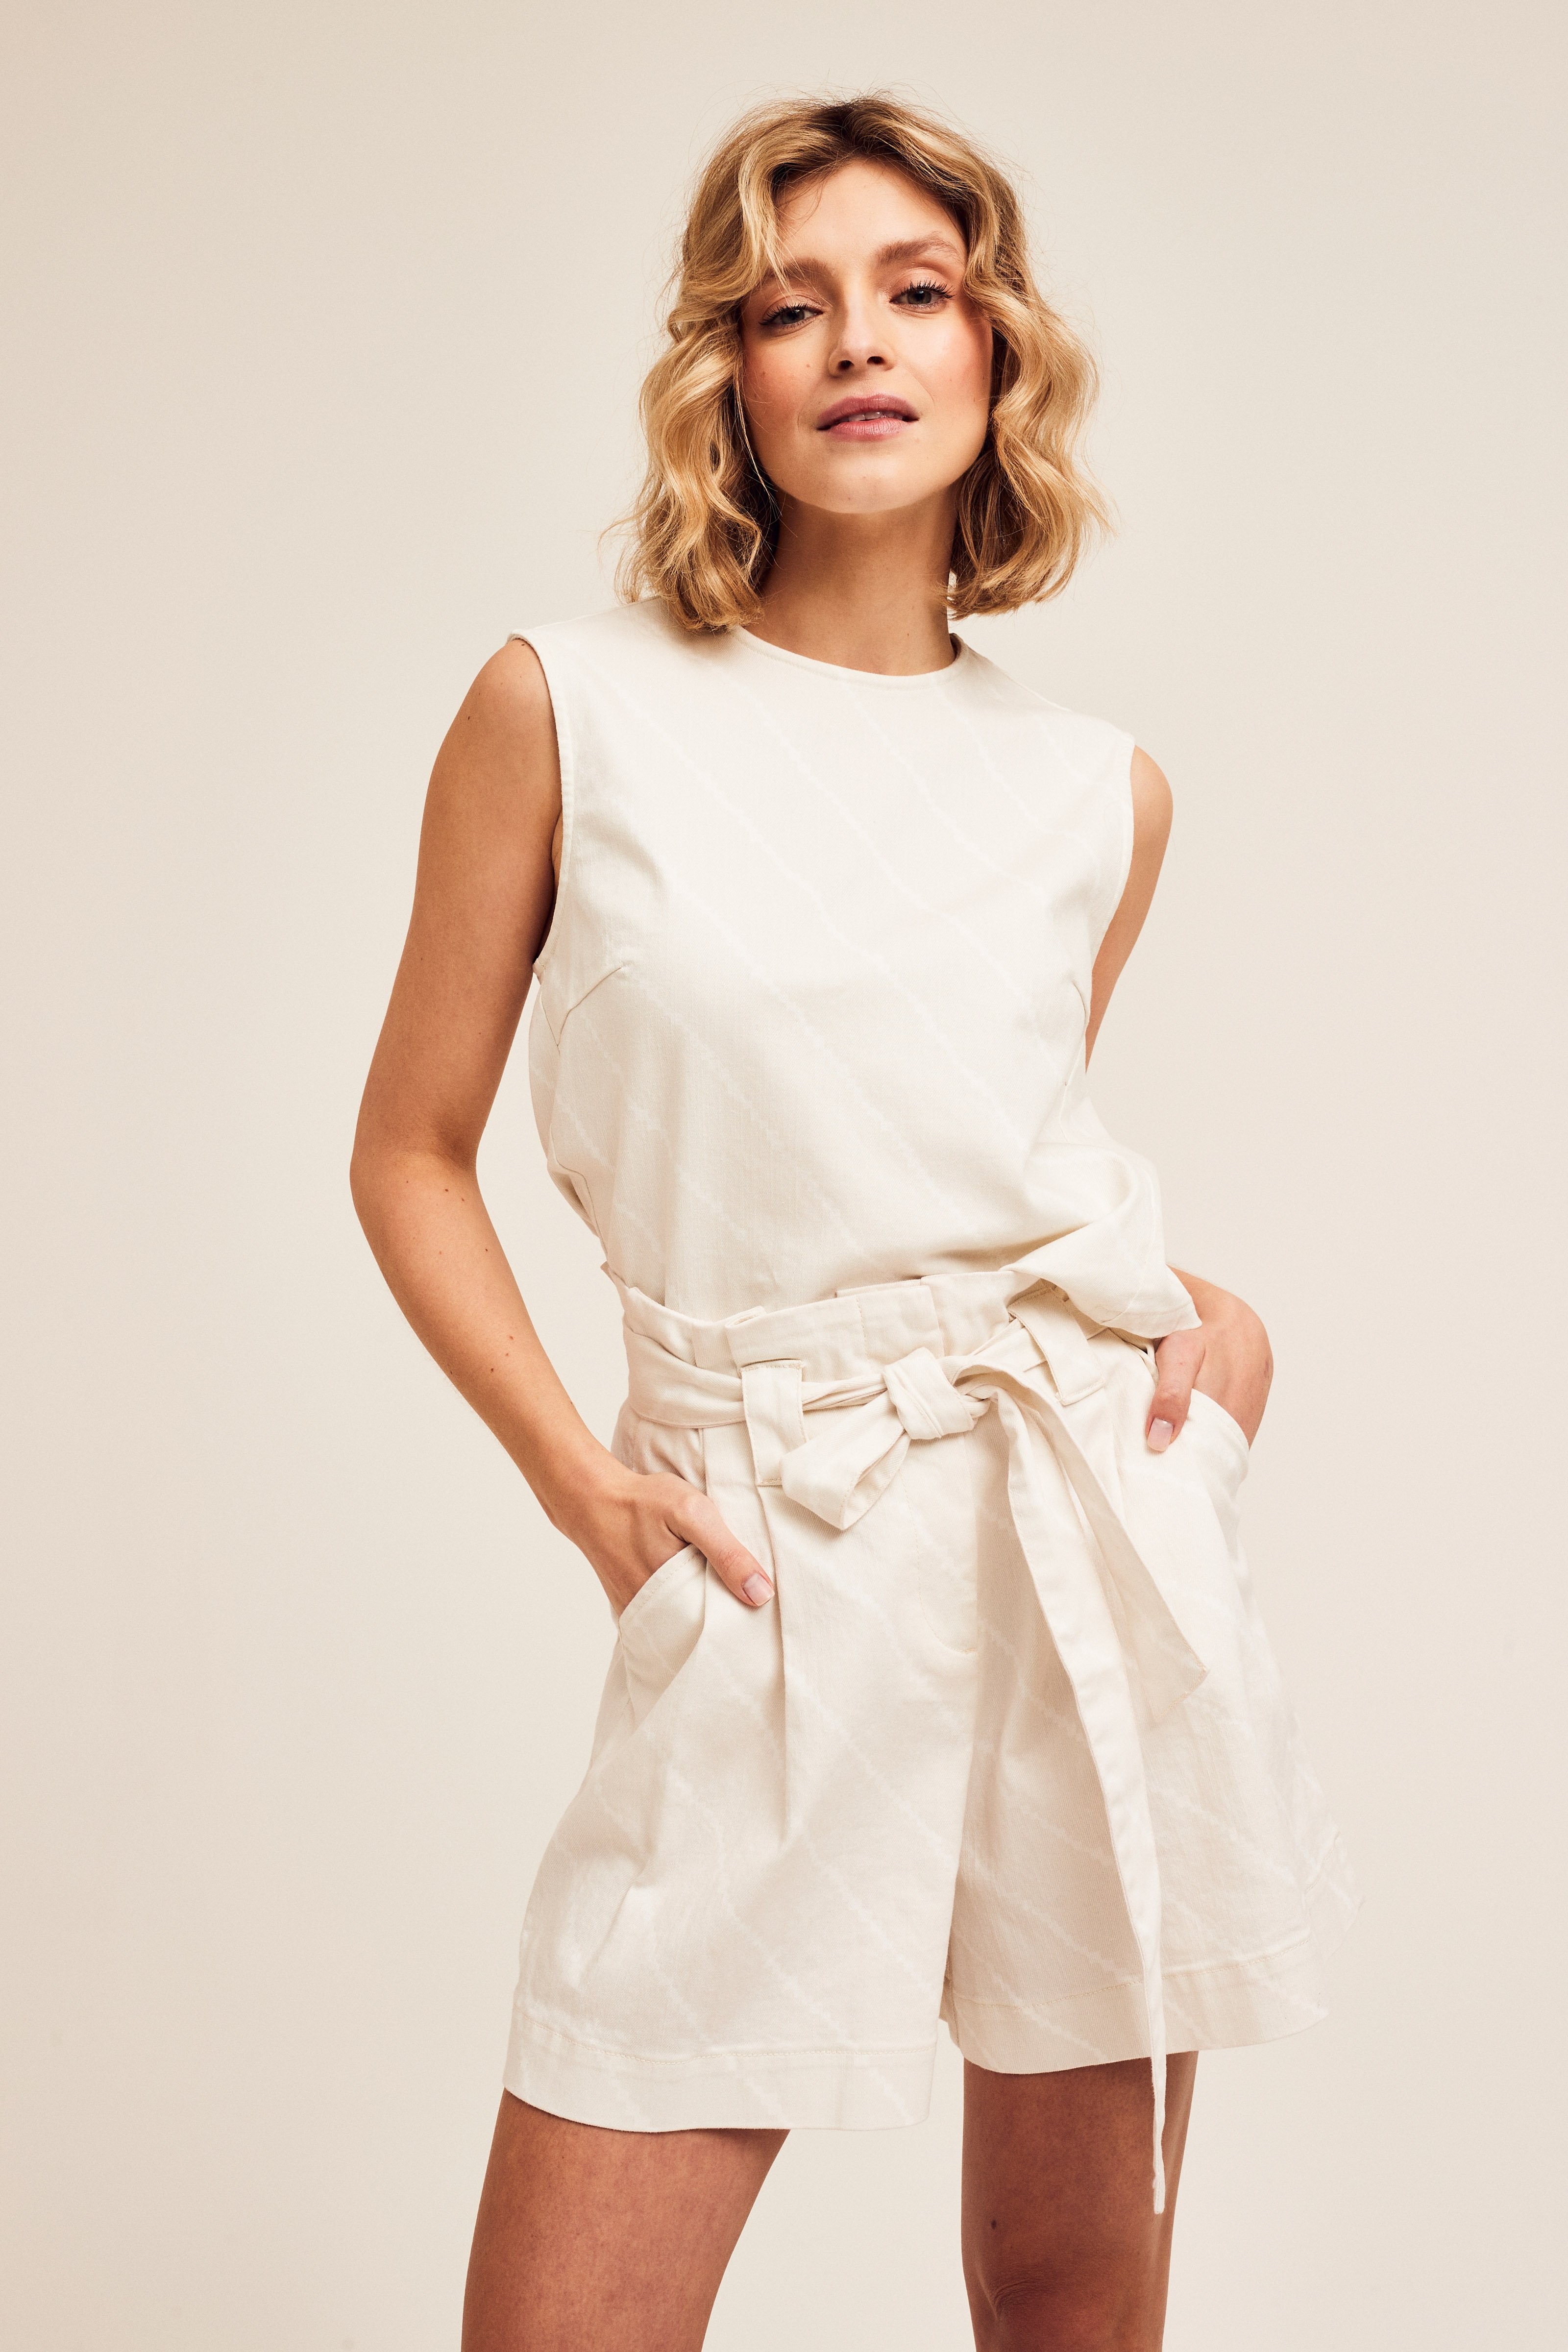 Bedankt Melodieus magnifiek IMANY - blouse zonder mouwen - wit | CKS Fashion